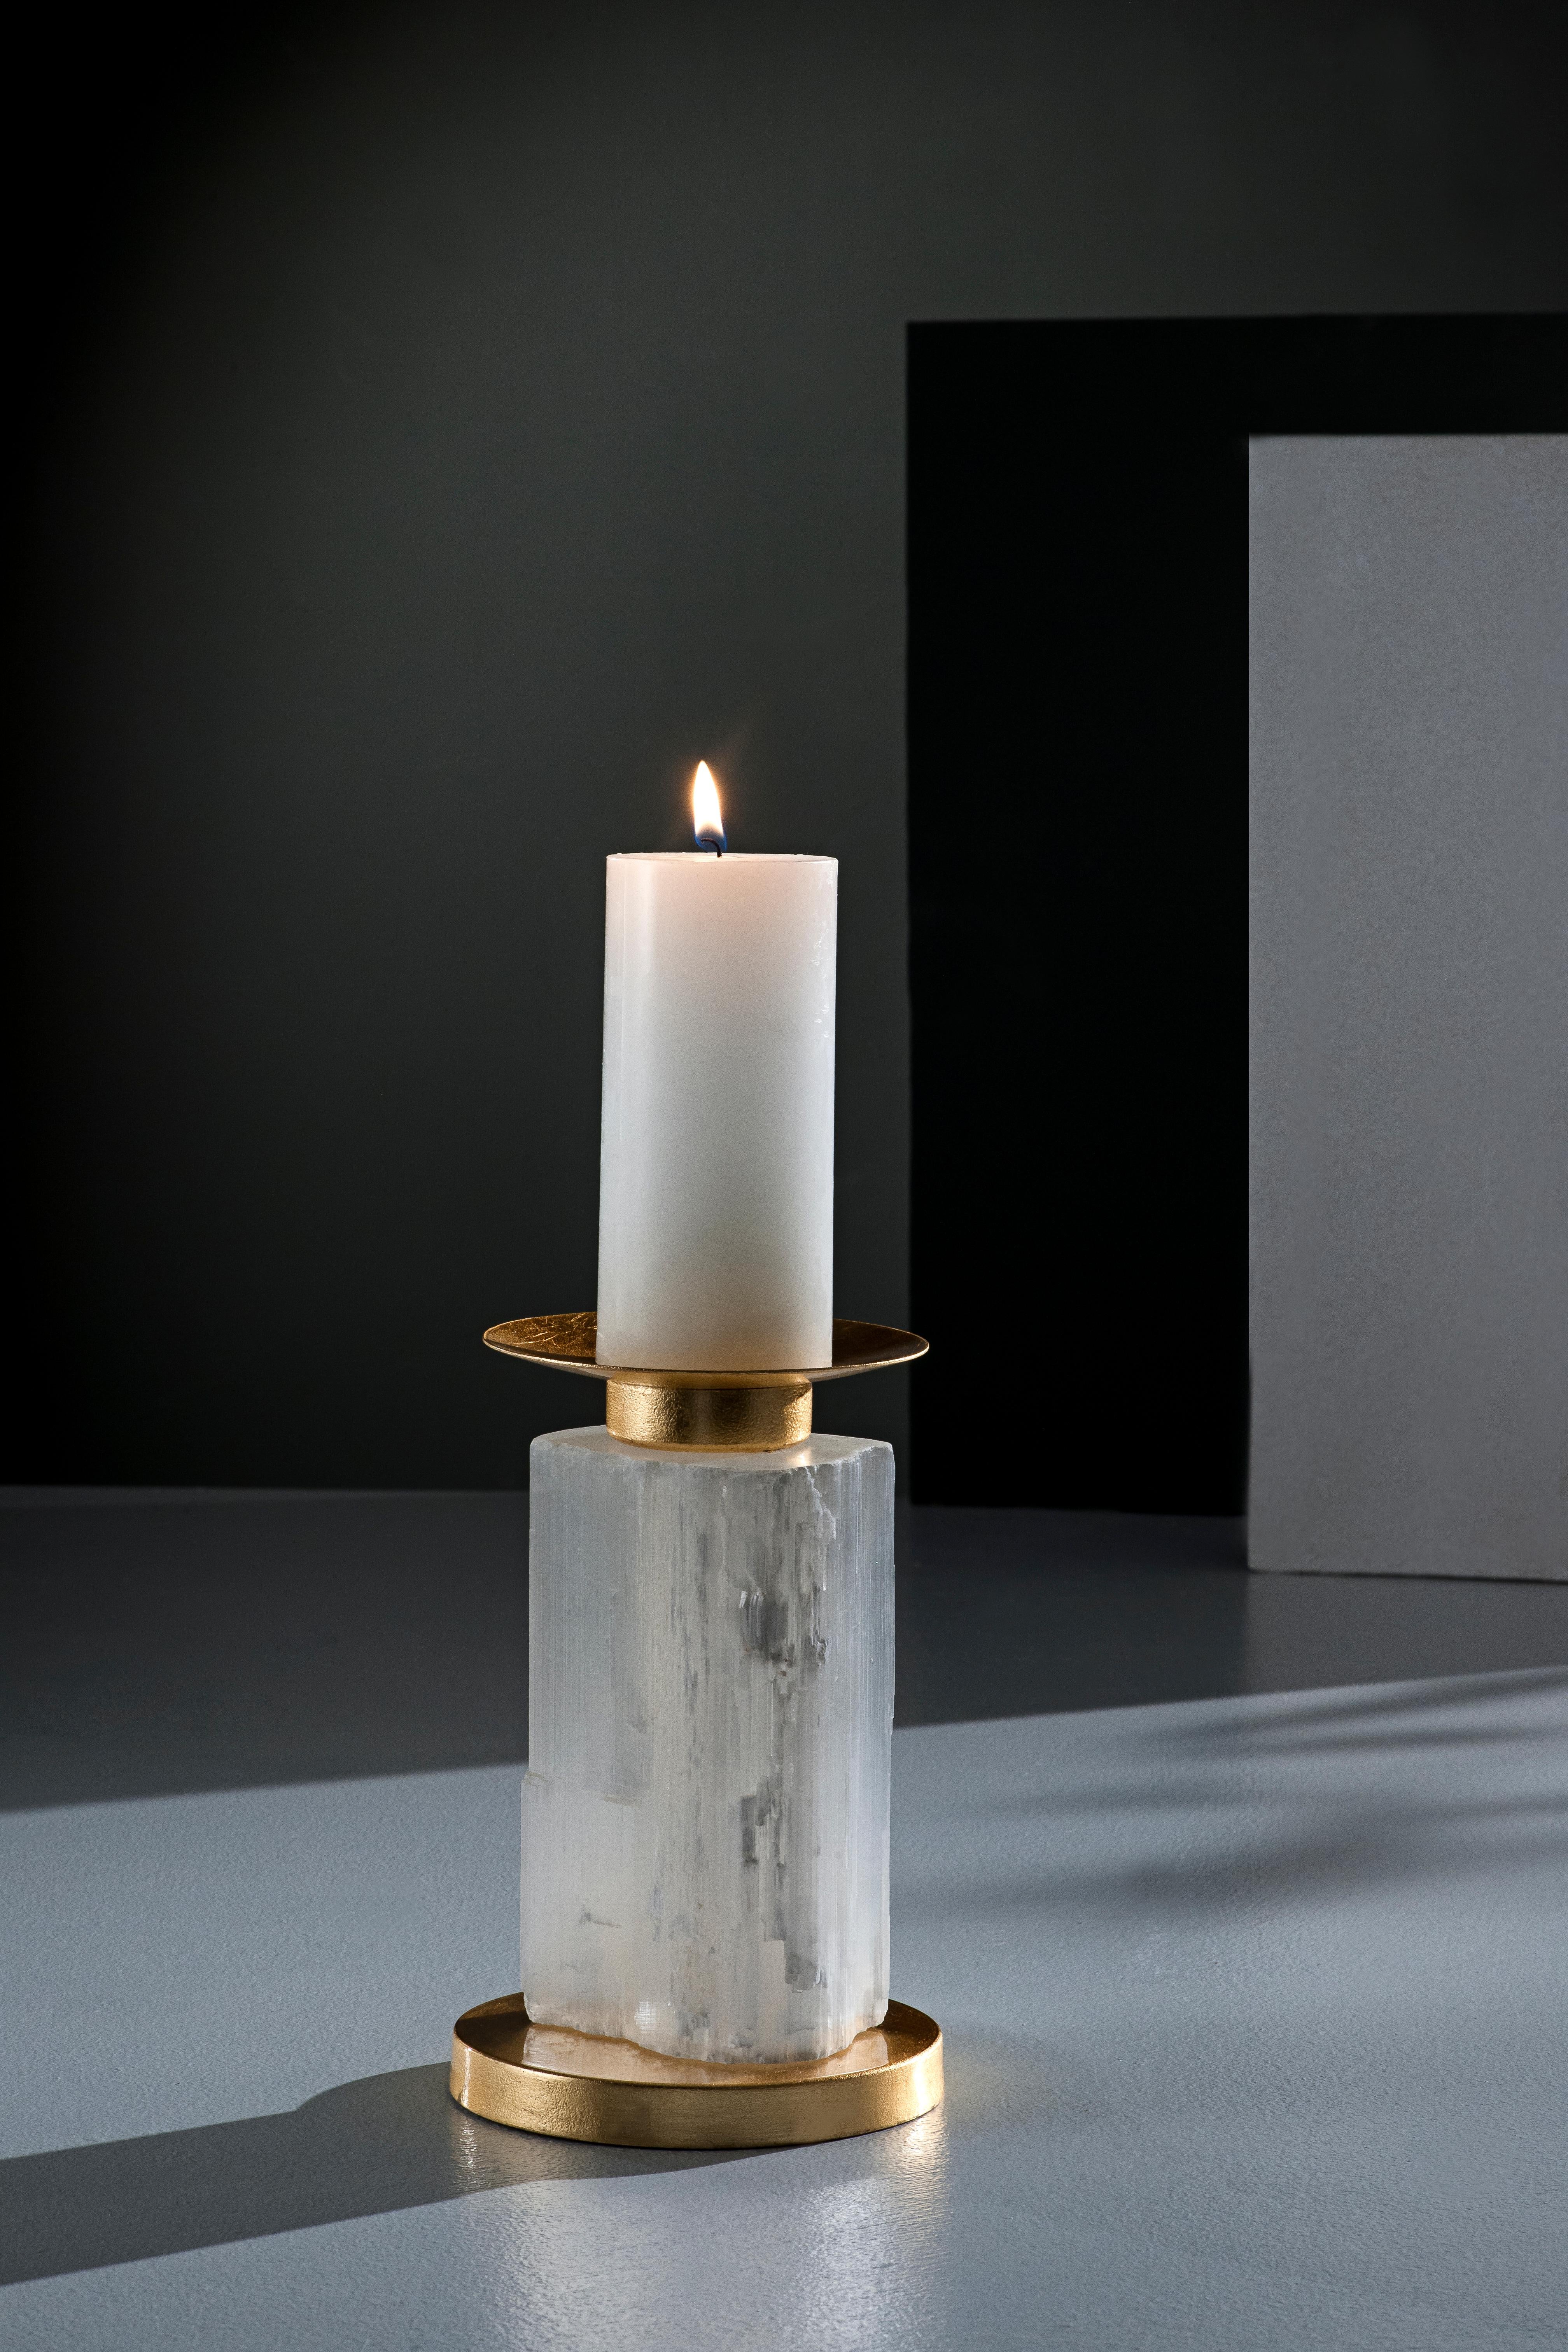 Selenite cedro candle holder
Dimensions: D 14 x H 20 cm
Materials: Selenite, steel.
 